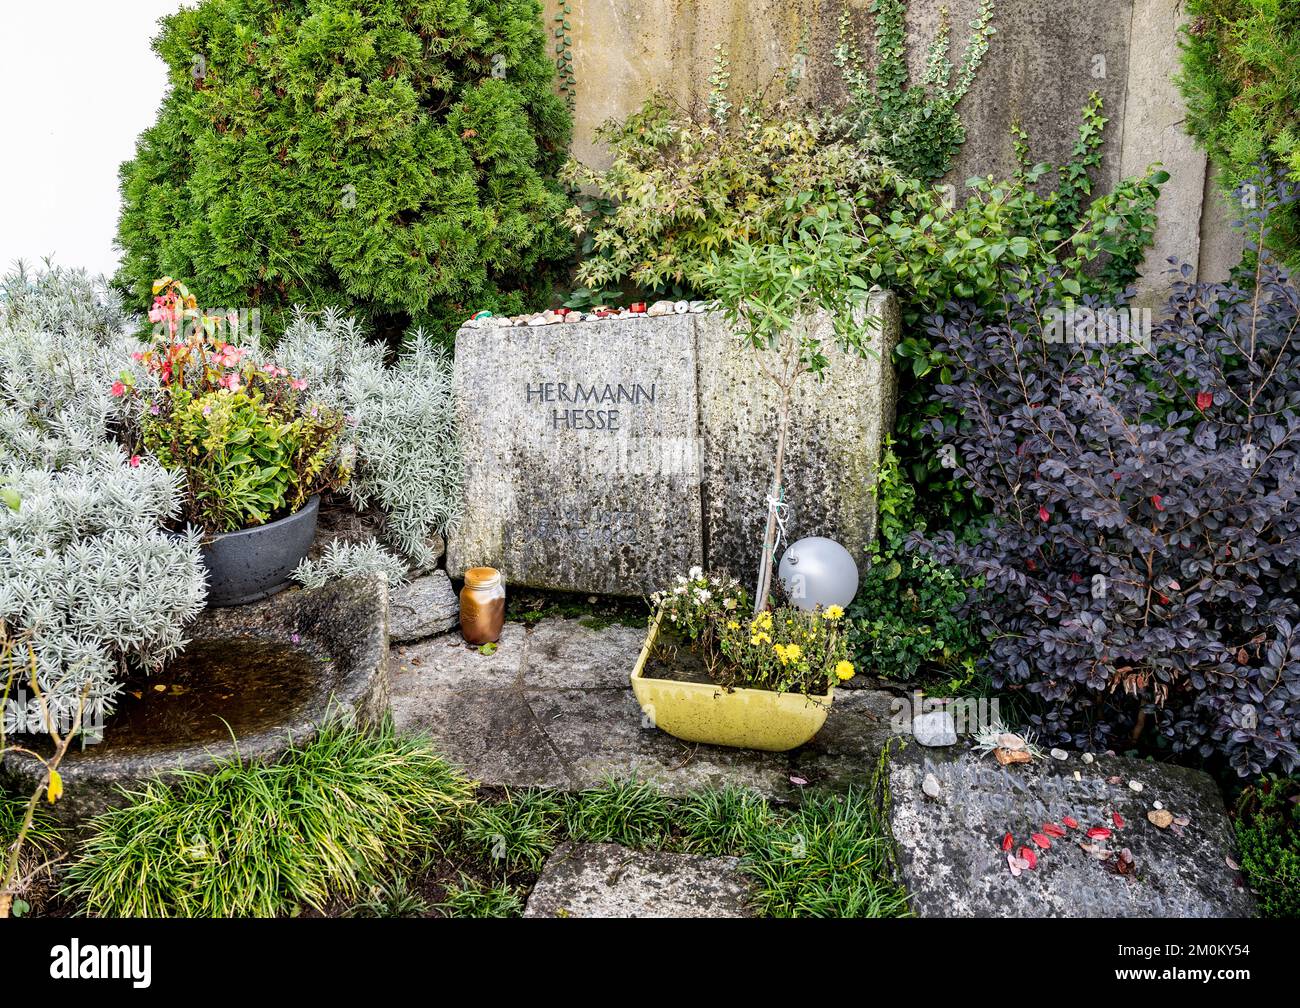 Grave of Hermann Hesse, cemetery of Saint Abundius, in Montagnola, Swiss village in Collina d'Oro municipality, canton of Ticino, Switzerland Stock Photo